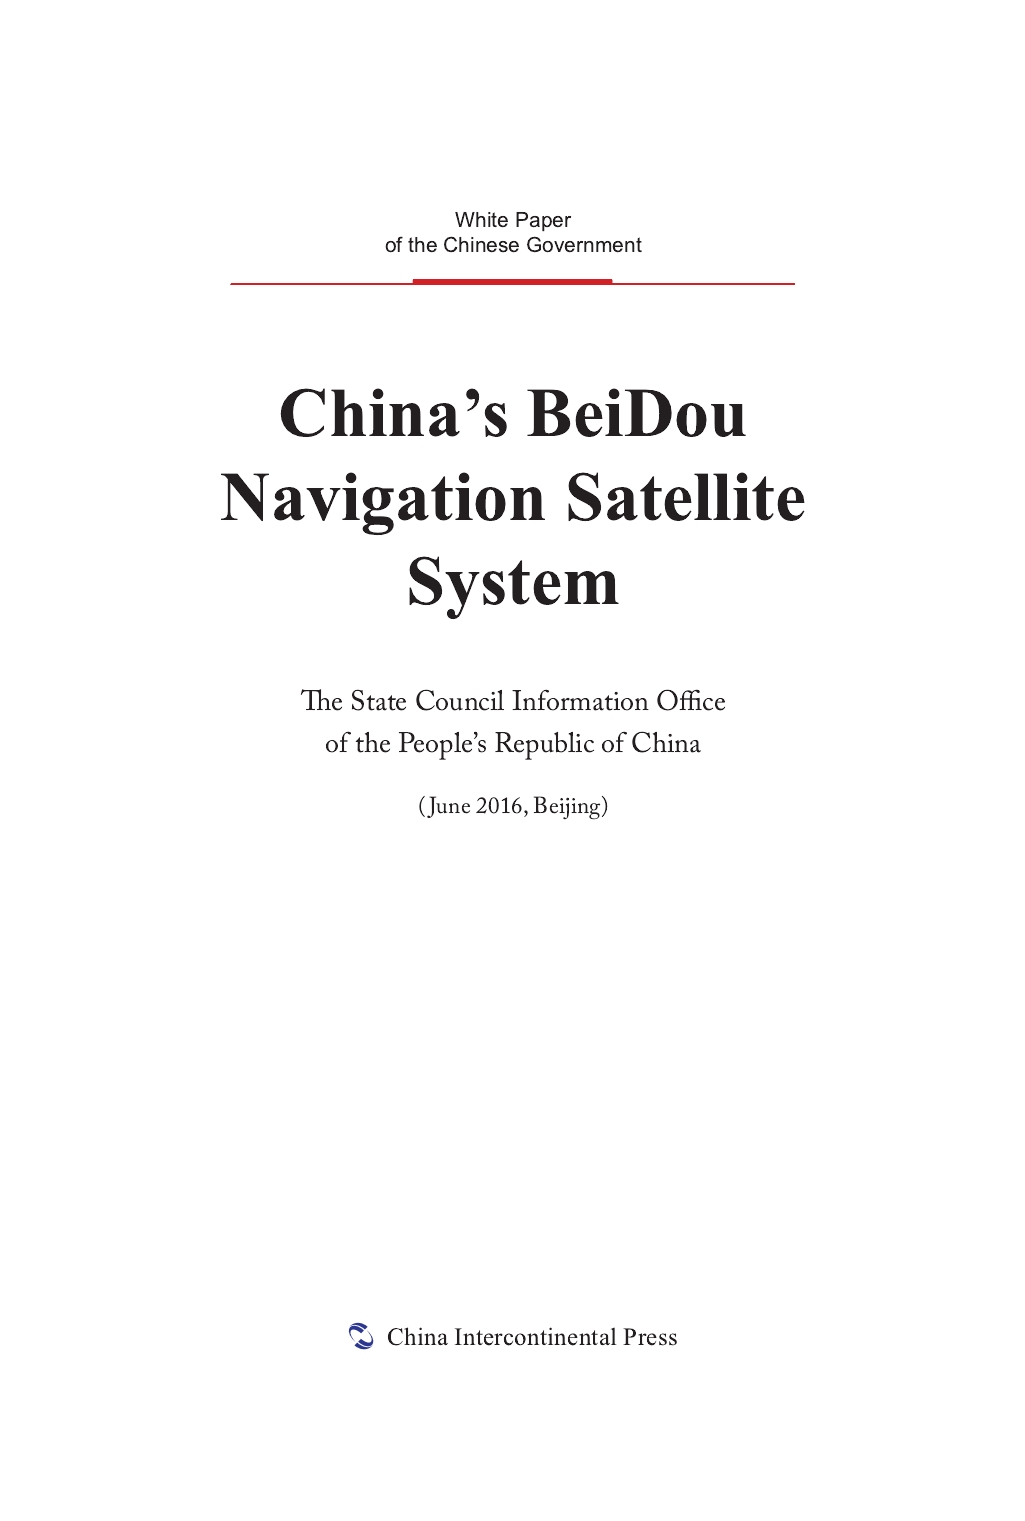 China's BeiDou Navigation Satellite System